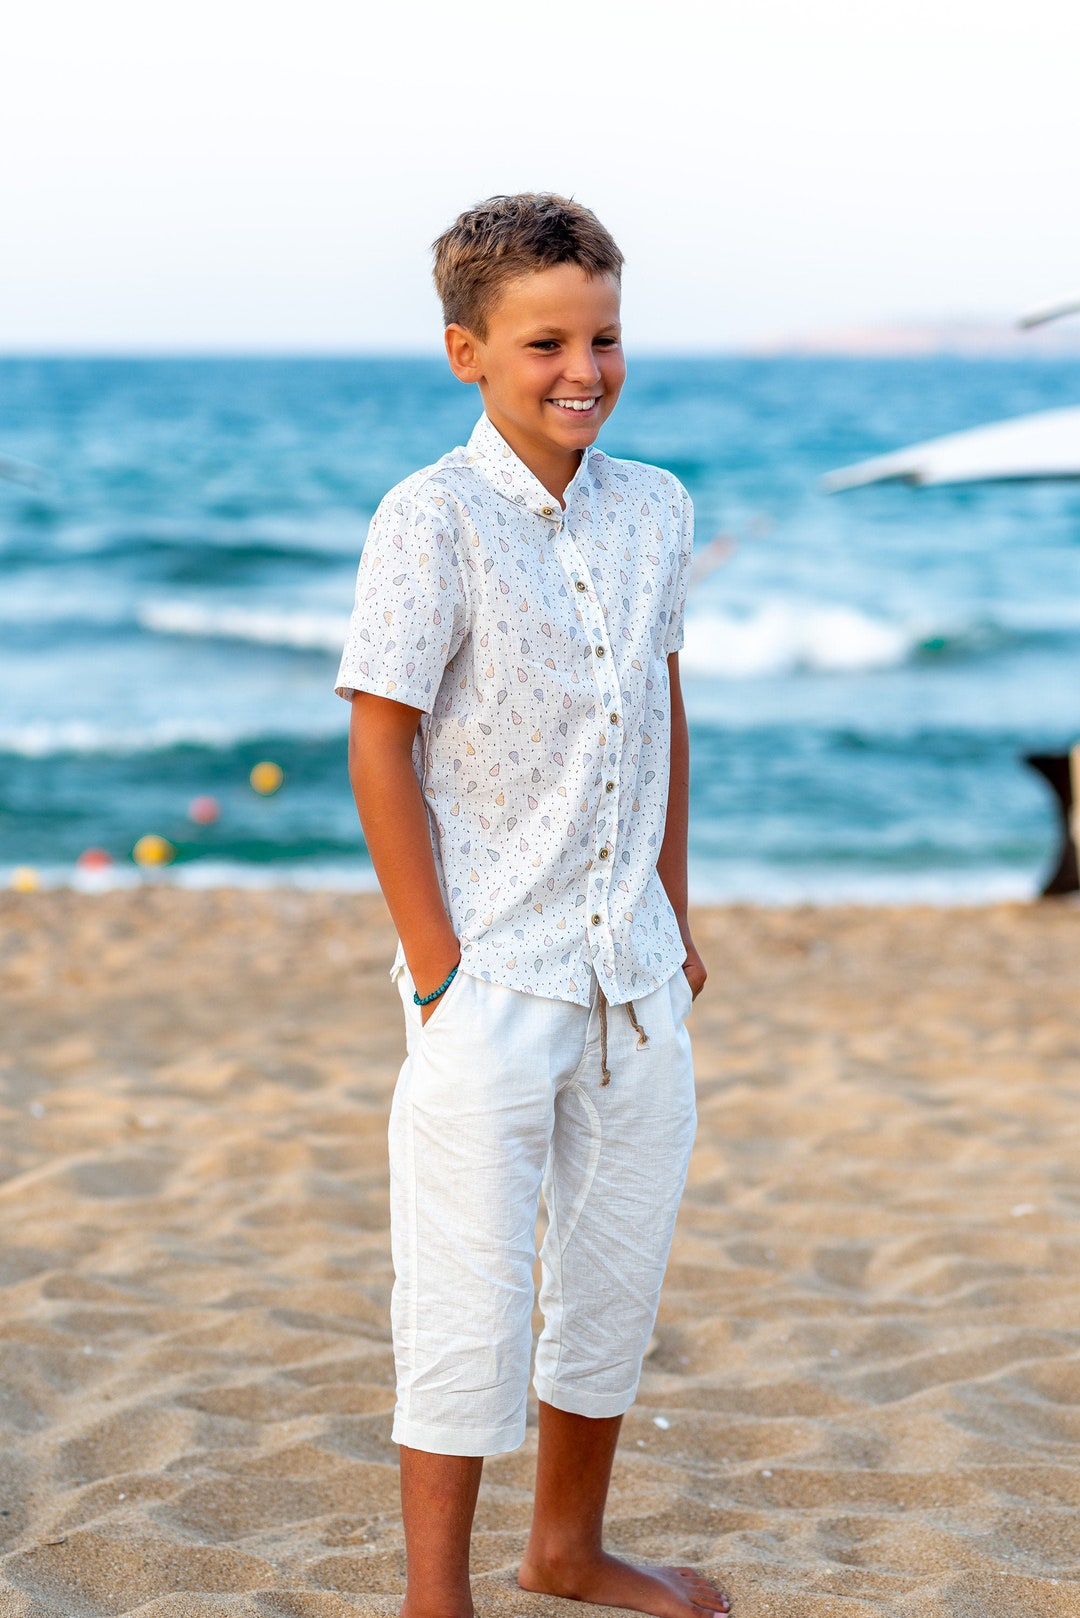 Boy bermuda shorts Size 4Y Color WHITE Color primary White Size